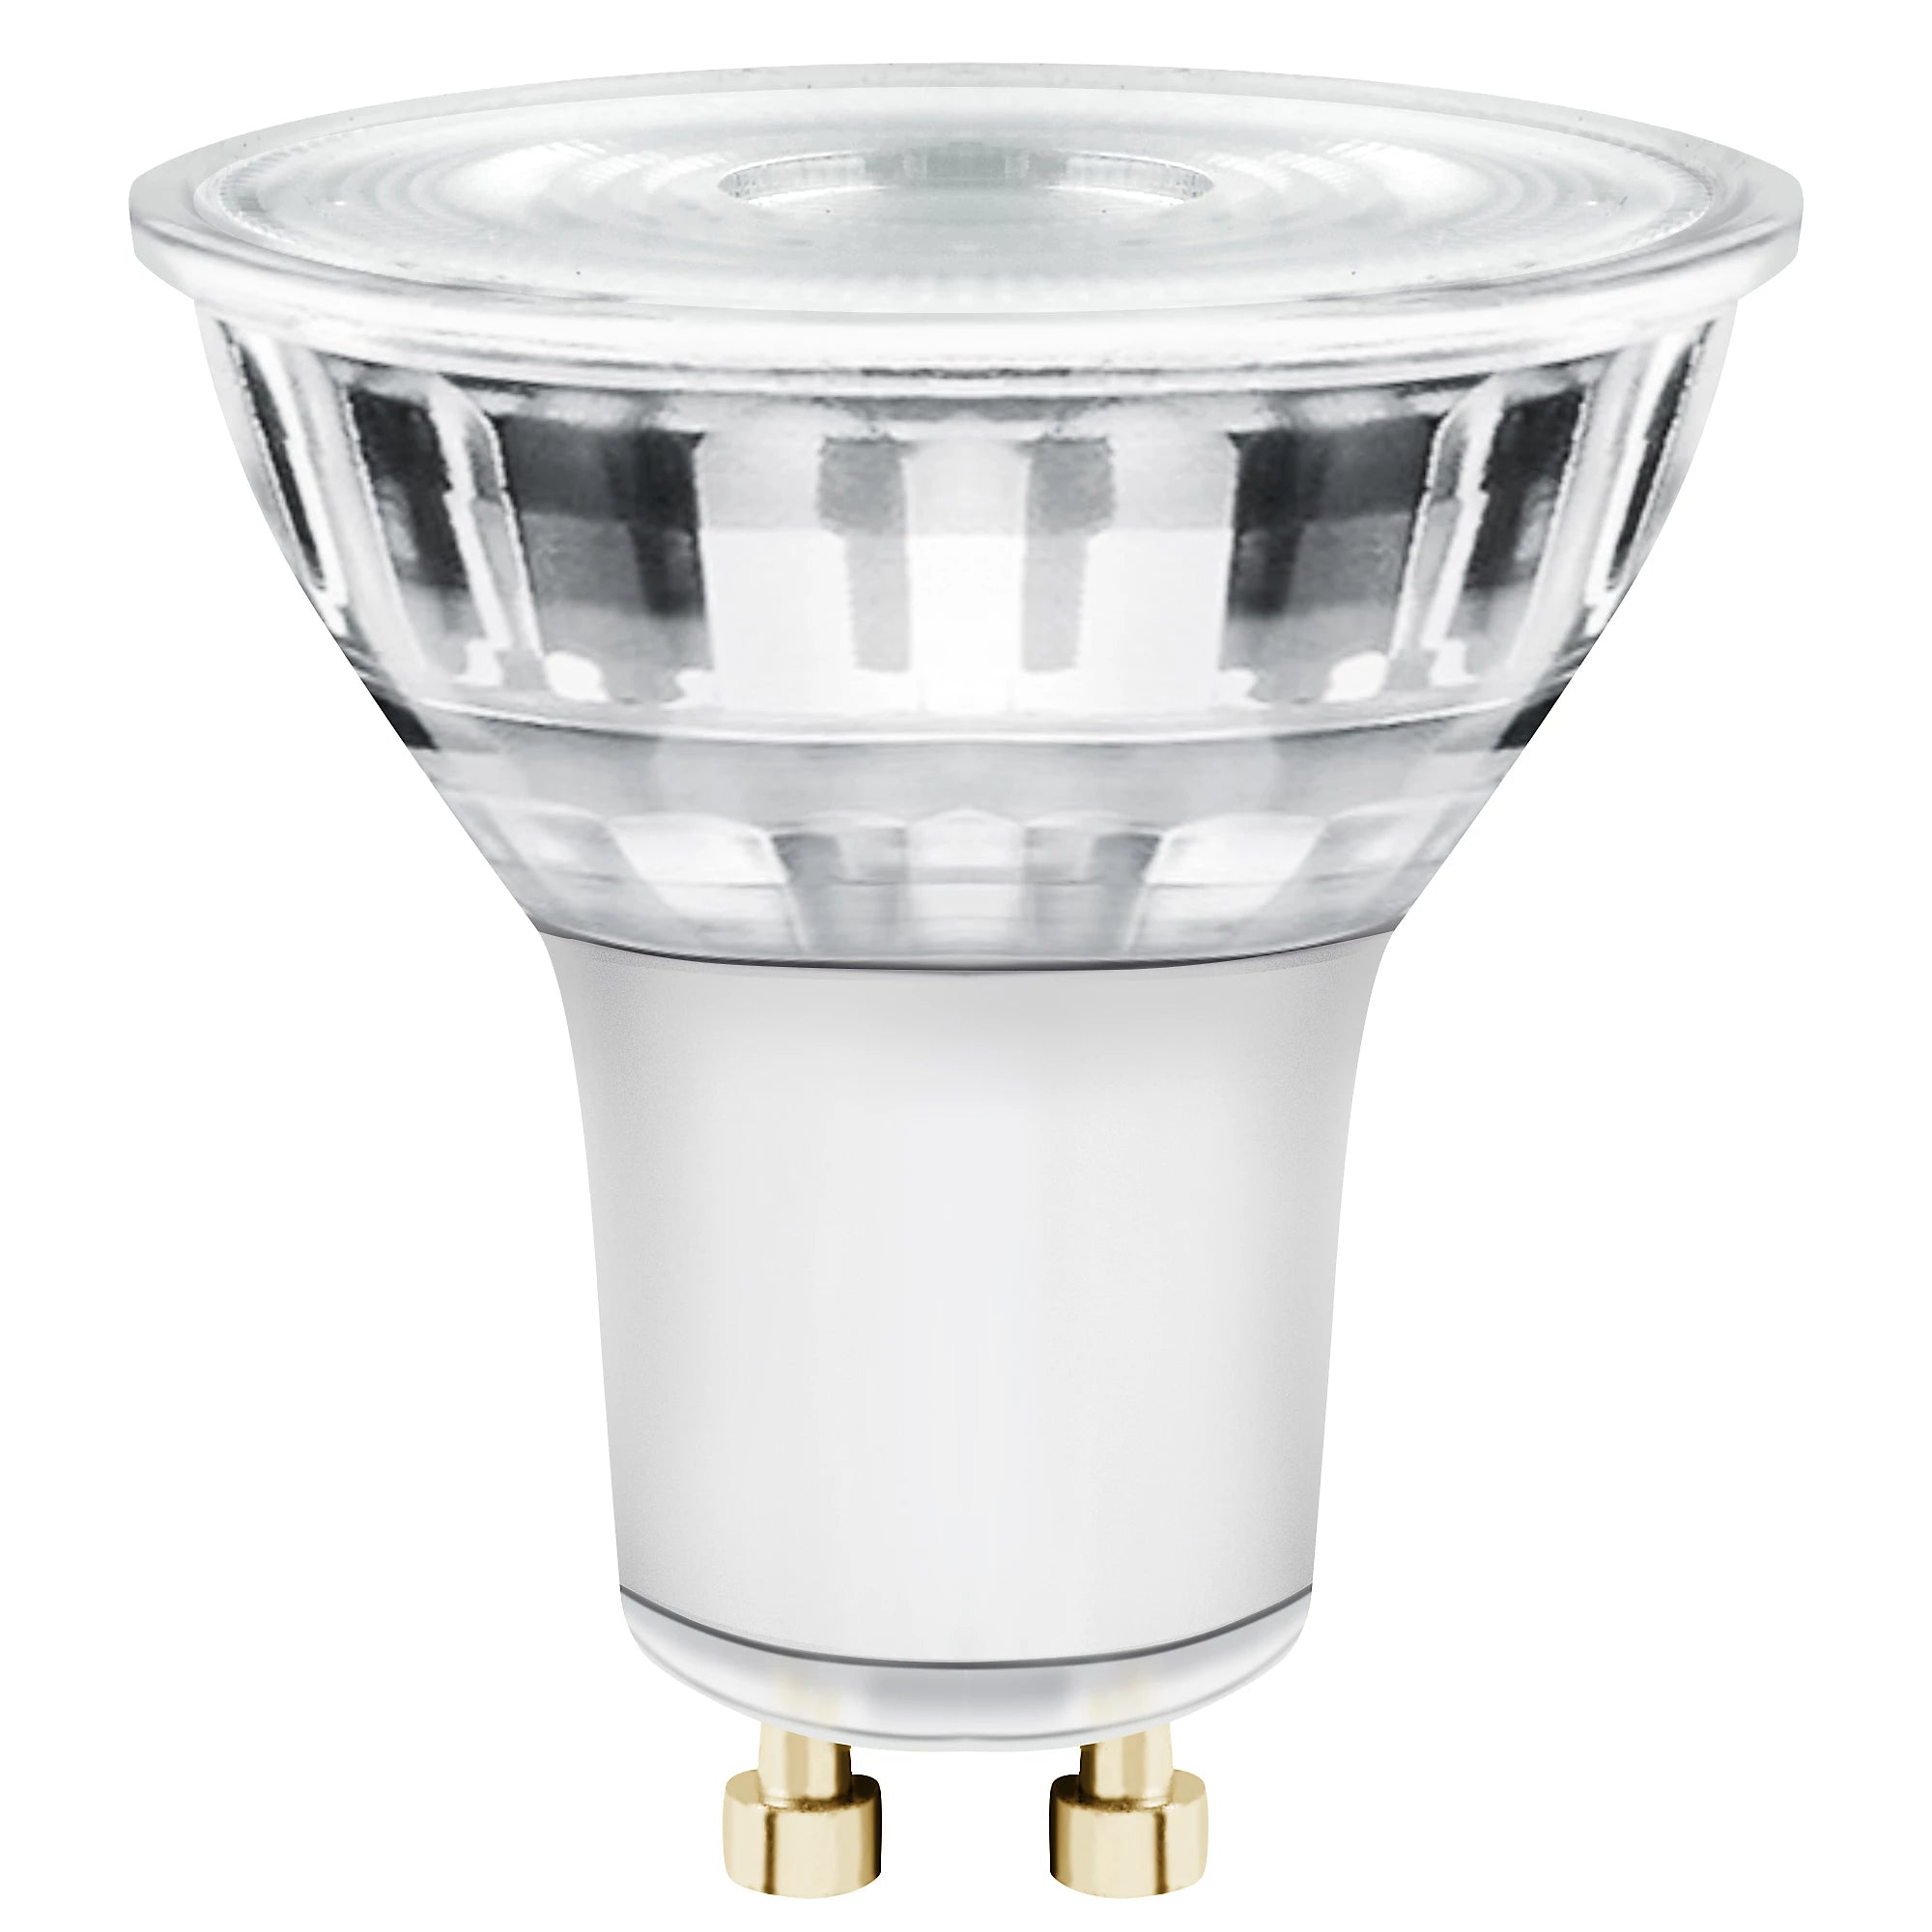 Diall Light bulb,3.6W 345lm white Pack of 8 2141D